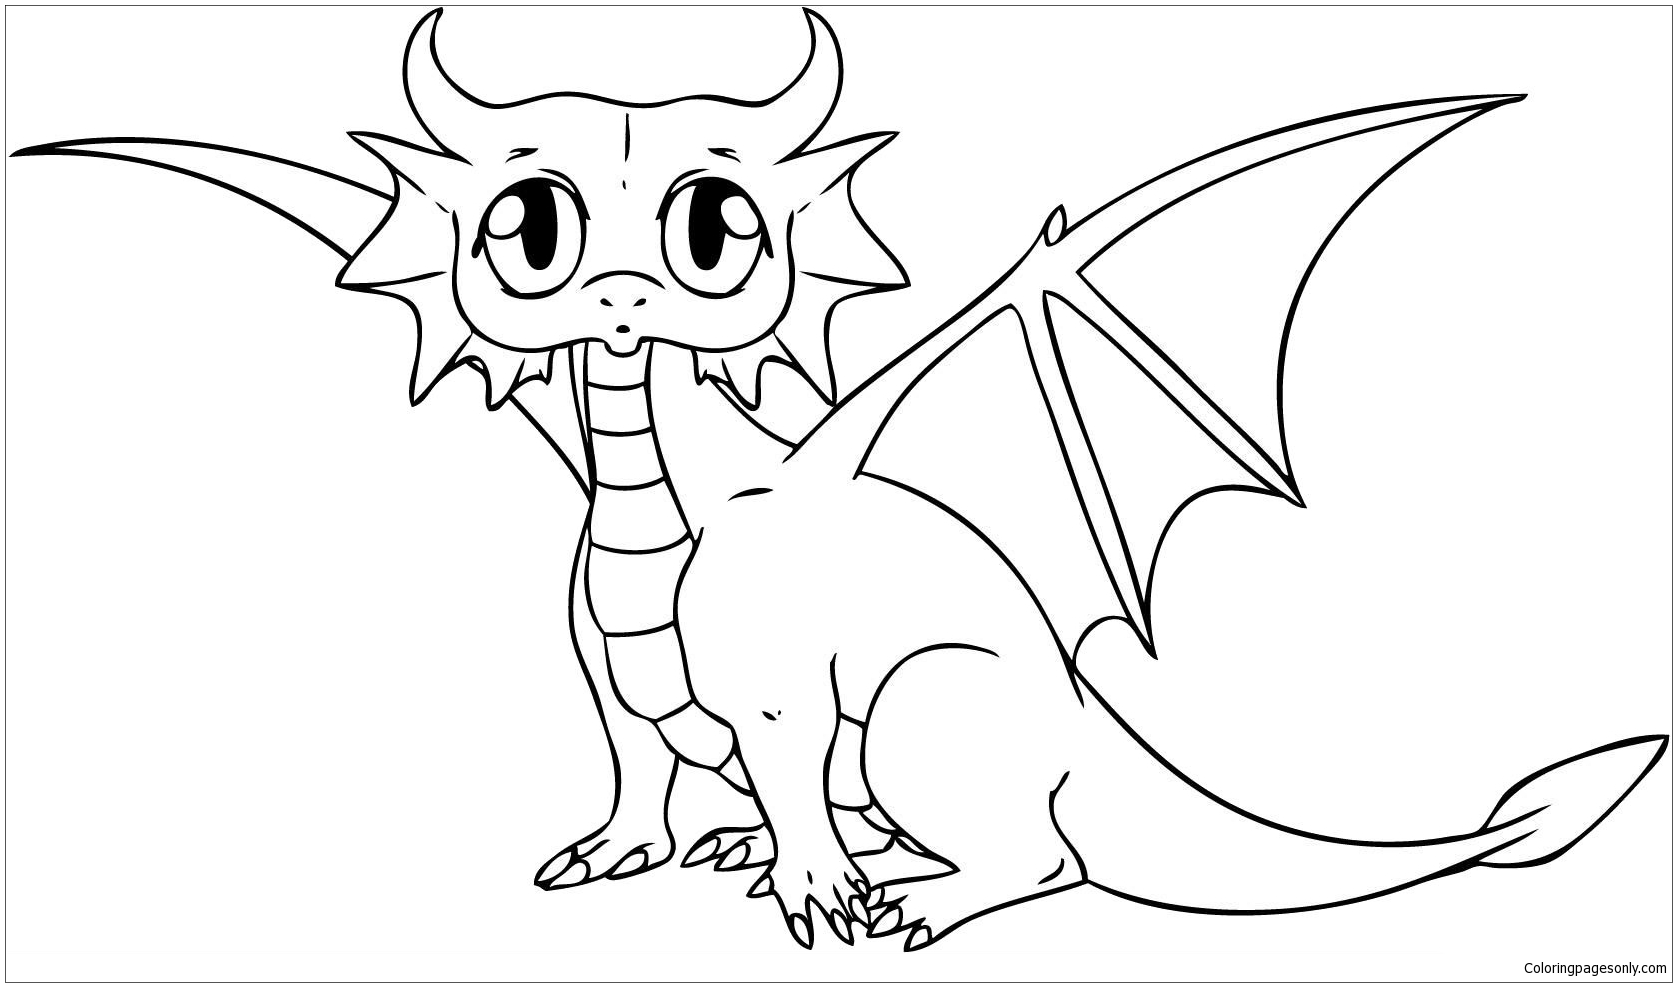 Shining dragon coloring book